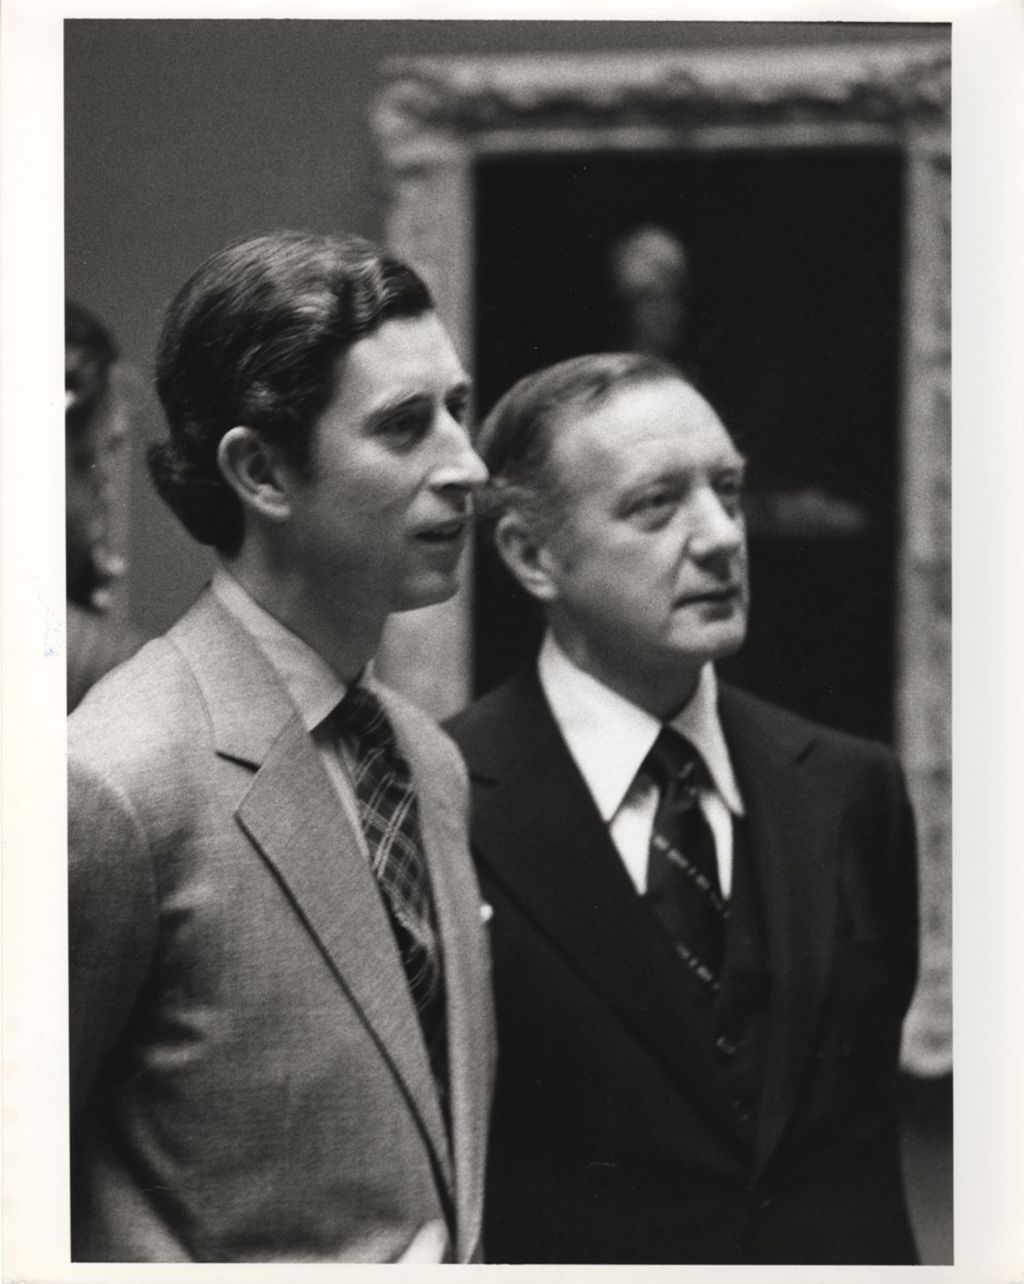 Prince Charles and Mayor Michael Bilandic